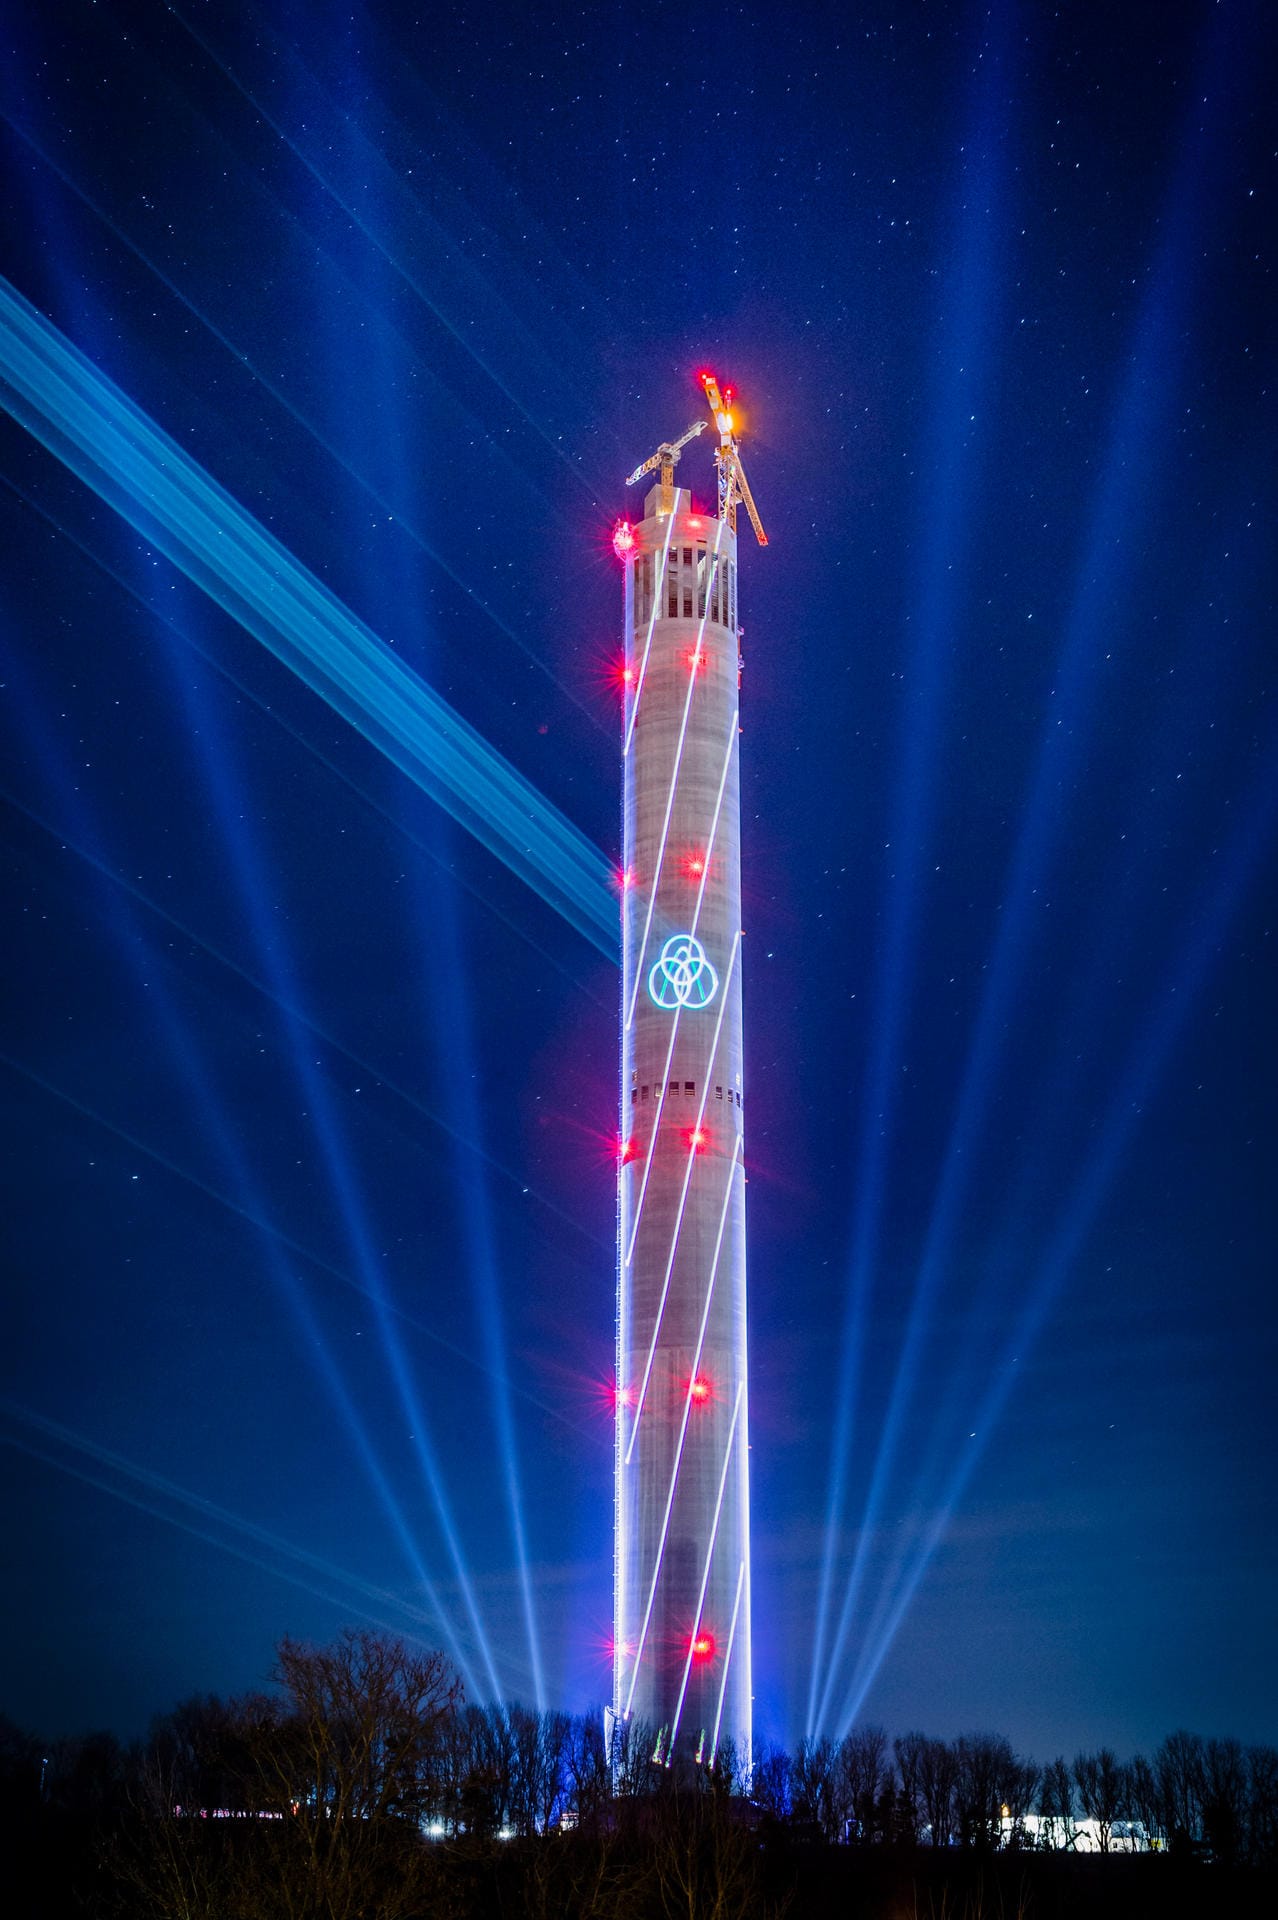 Dank moderner Beleuchtungstechnik erstrahlt der Turm auch nachts.